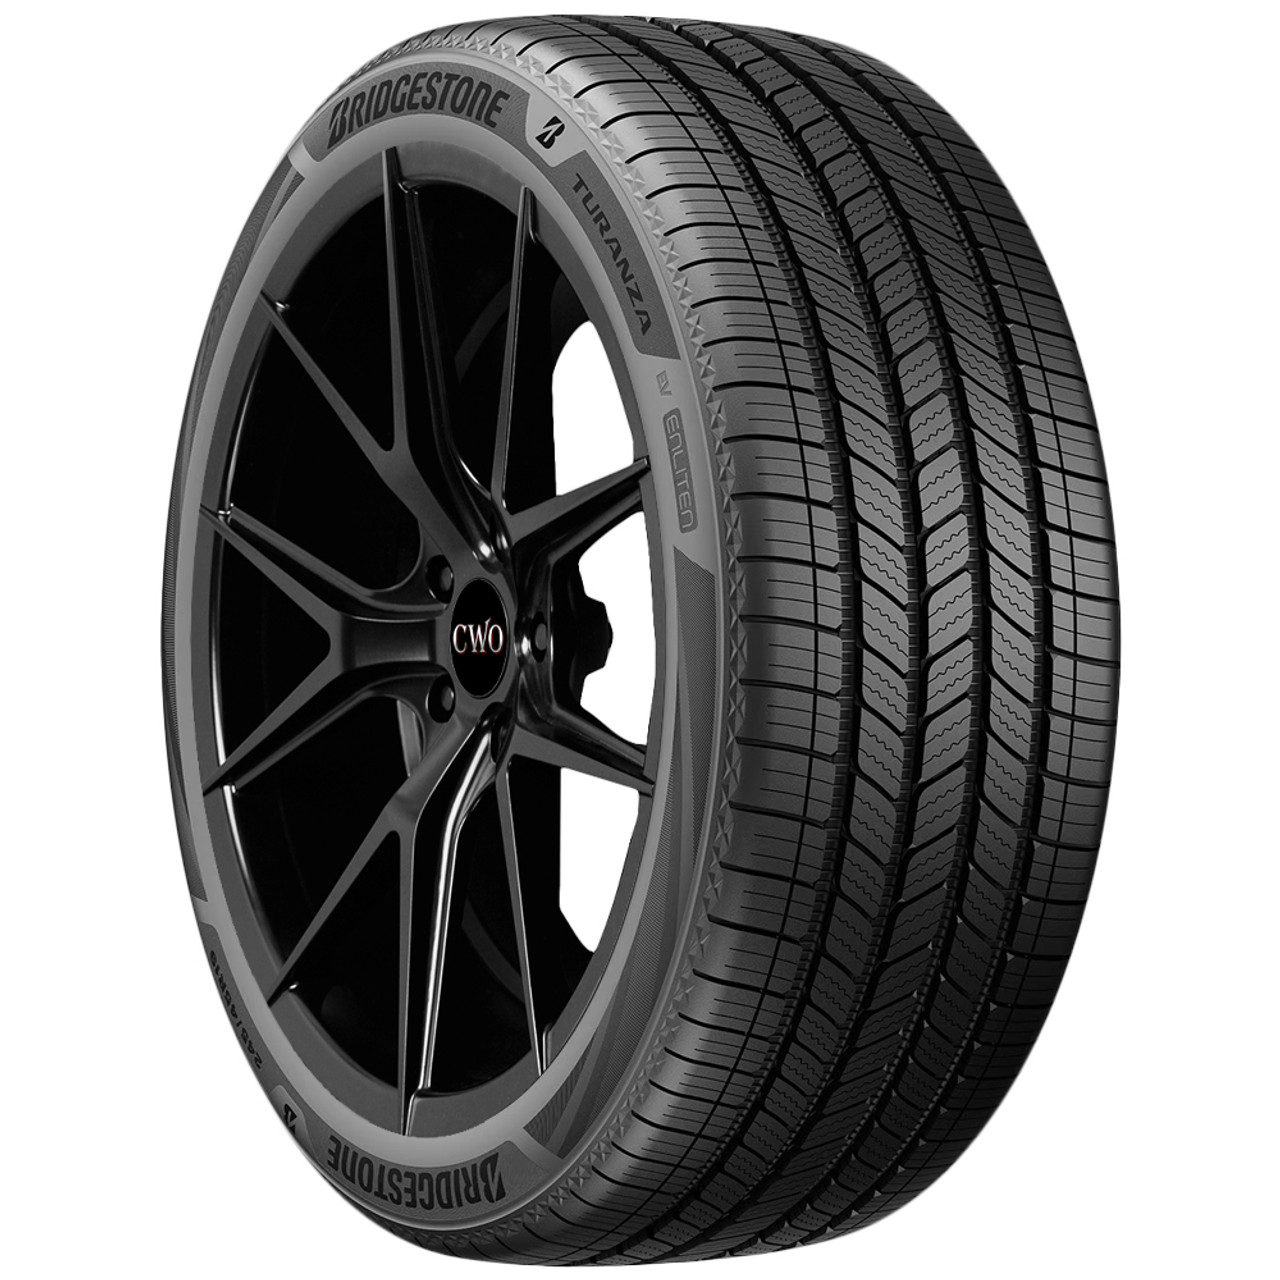 235/45R18 Bridgestone Turanza EV 98Y XL Black Wall Tire 014-288